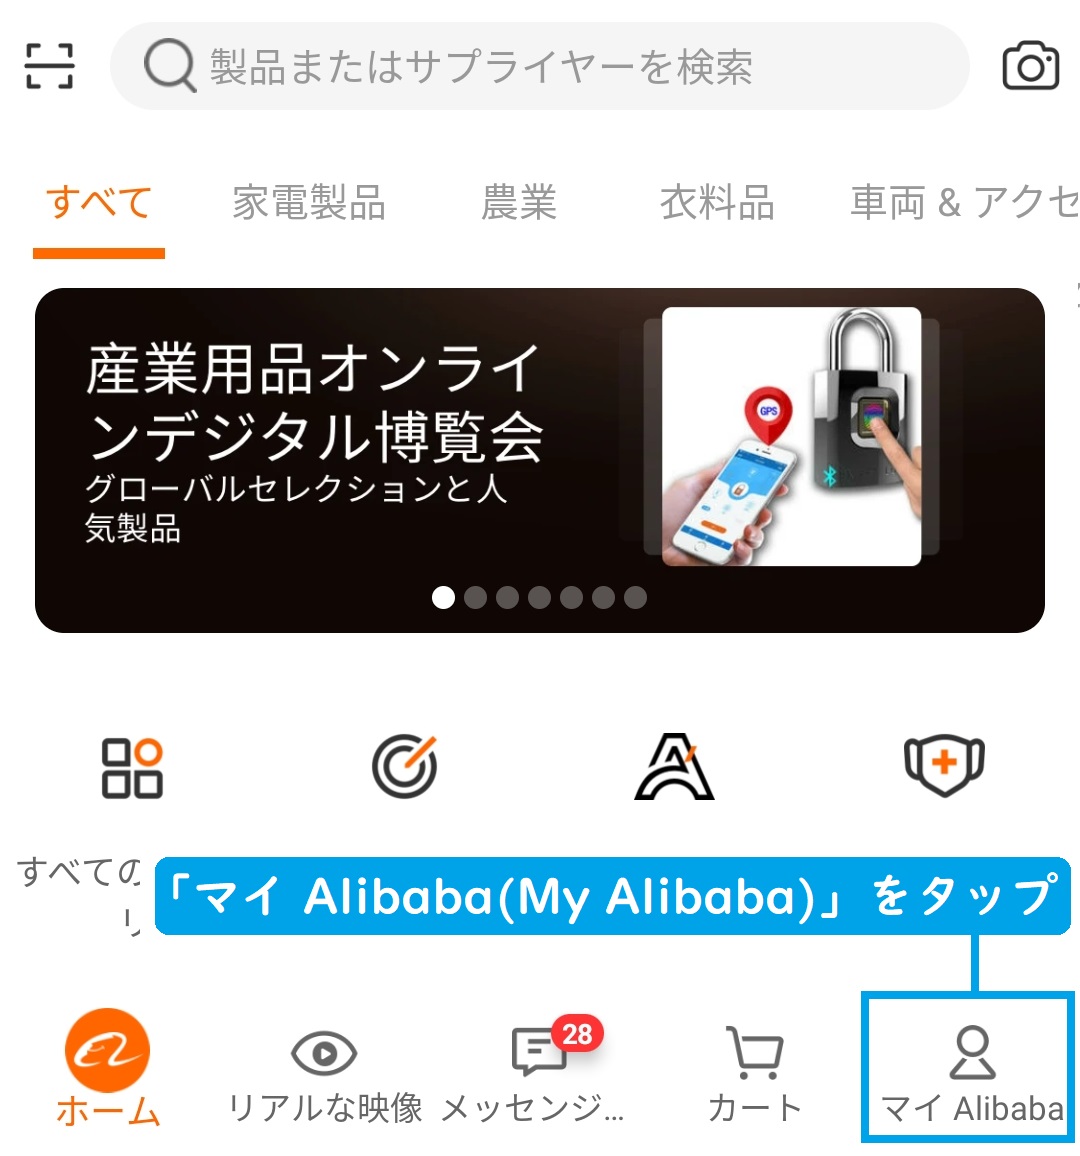 Alibaba.com マイALibaba